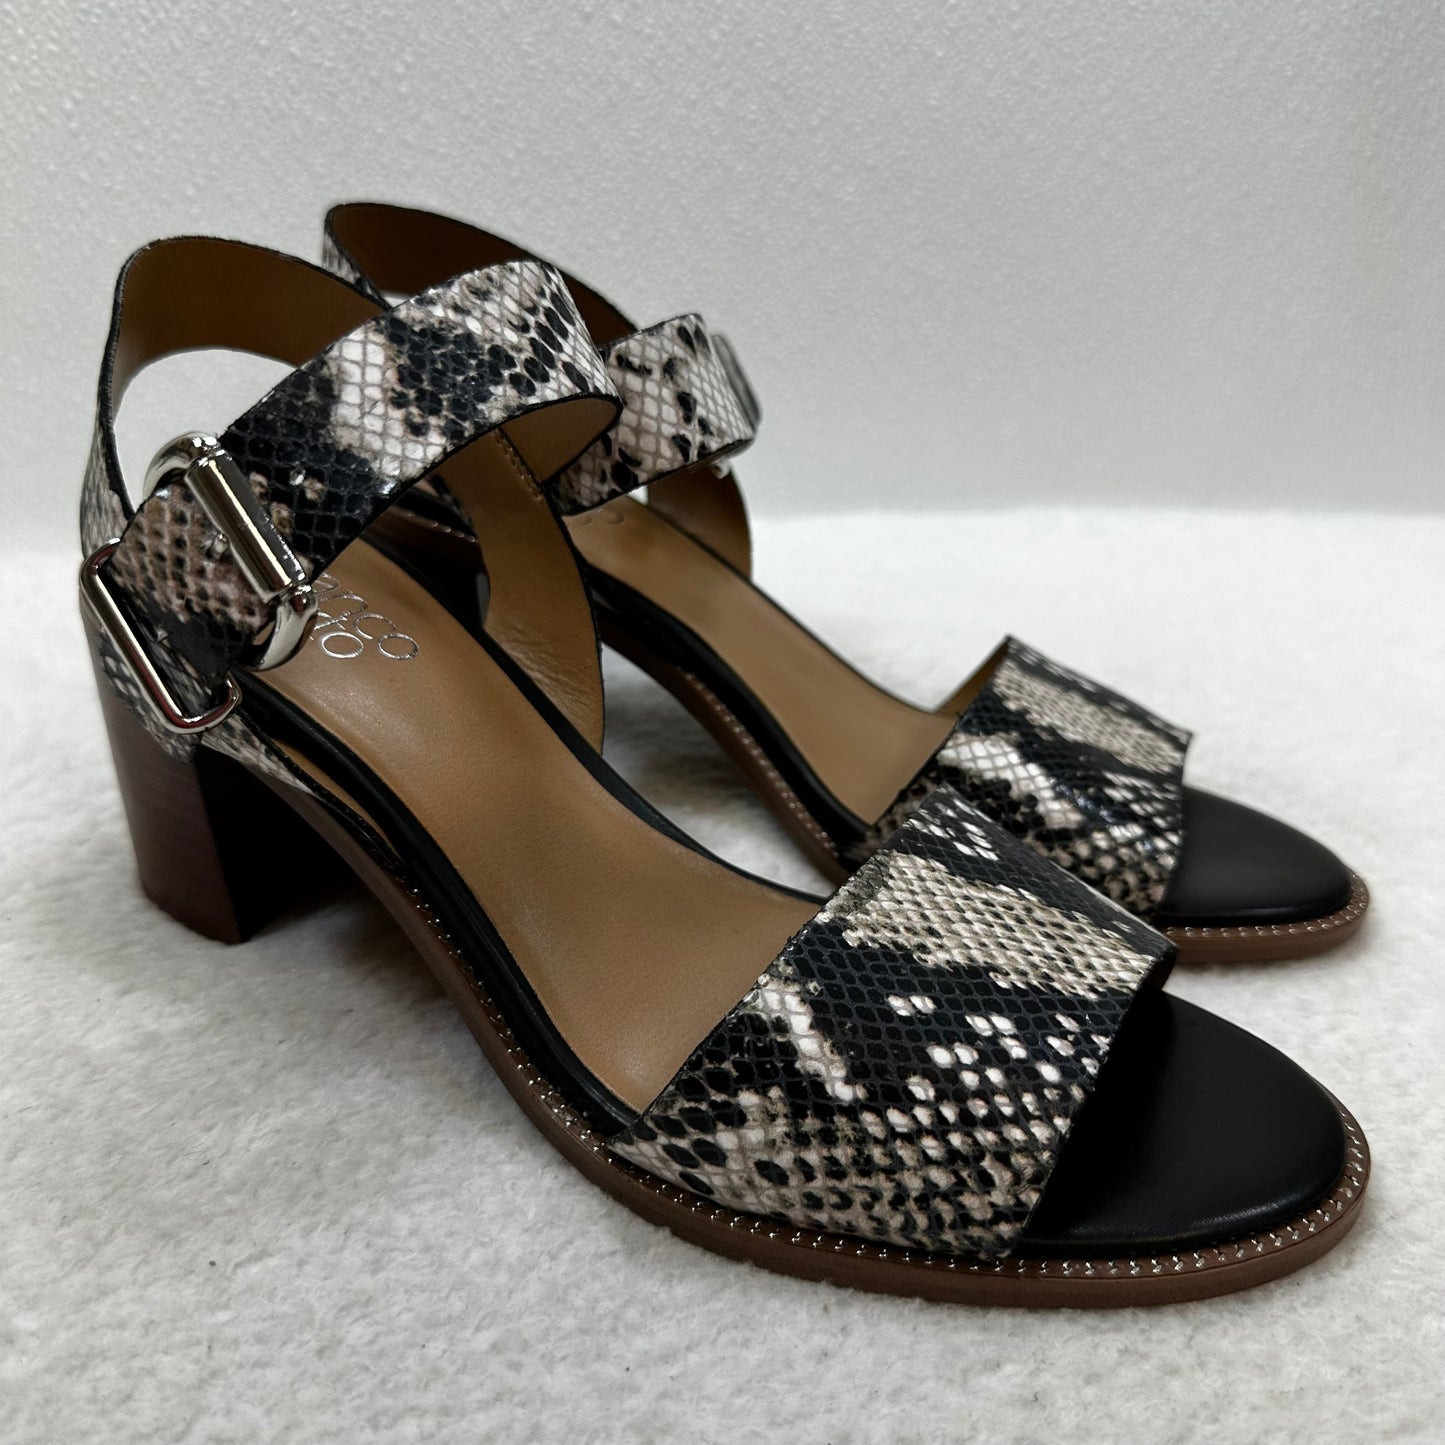 Snakeskin Print Shoes Heels Block Franco Sarto, Size 9